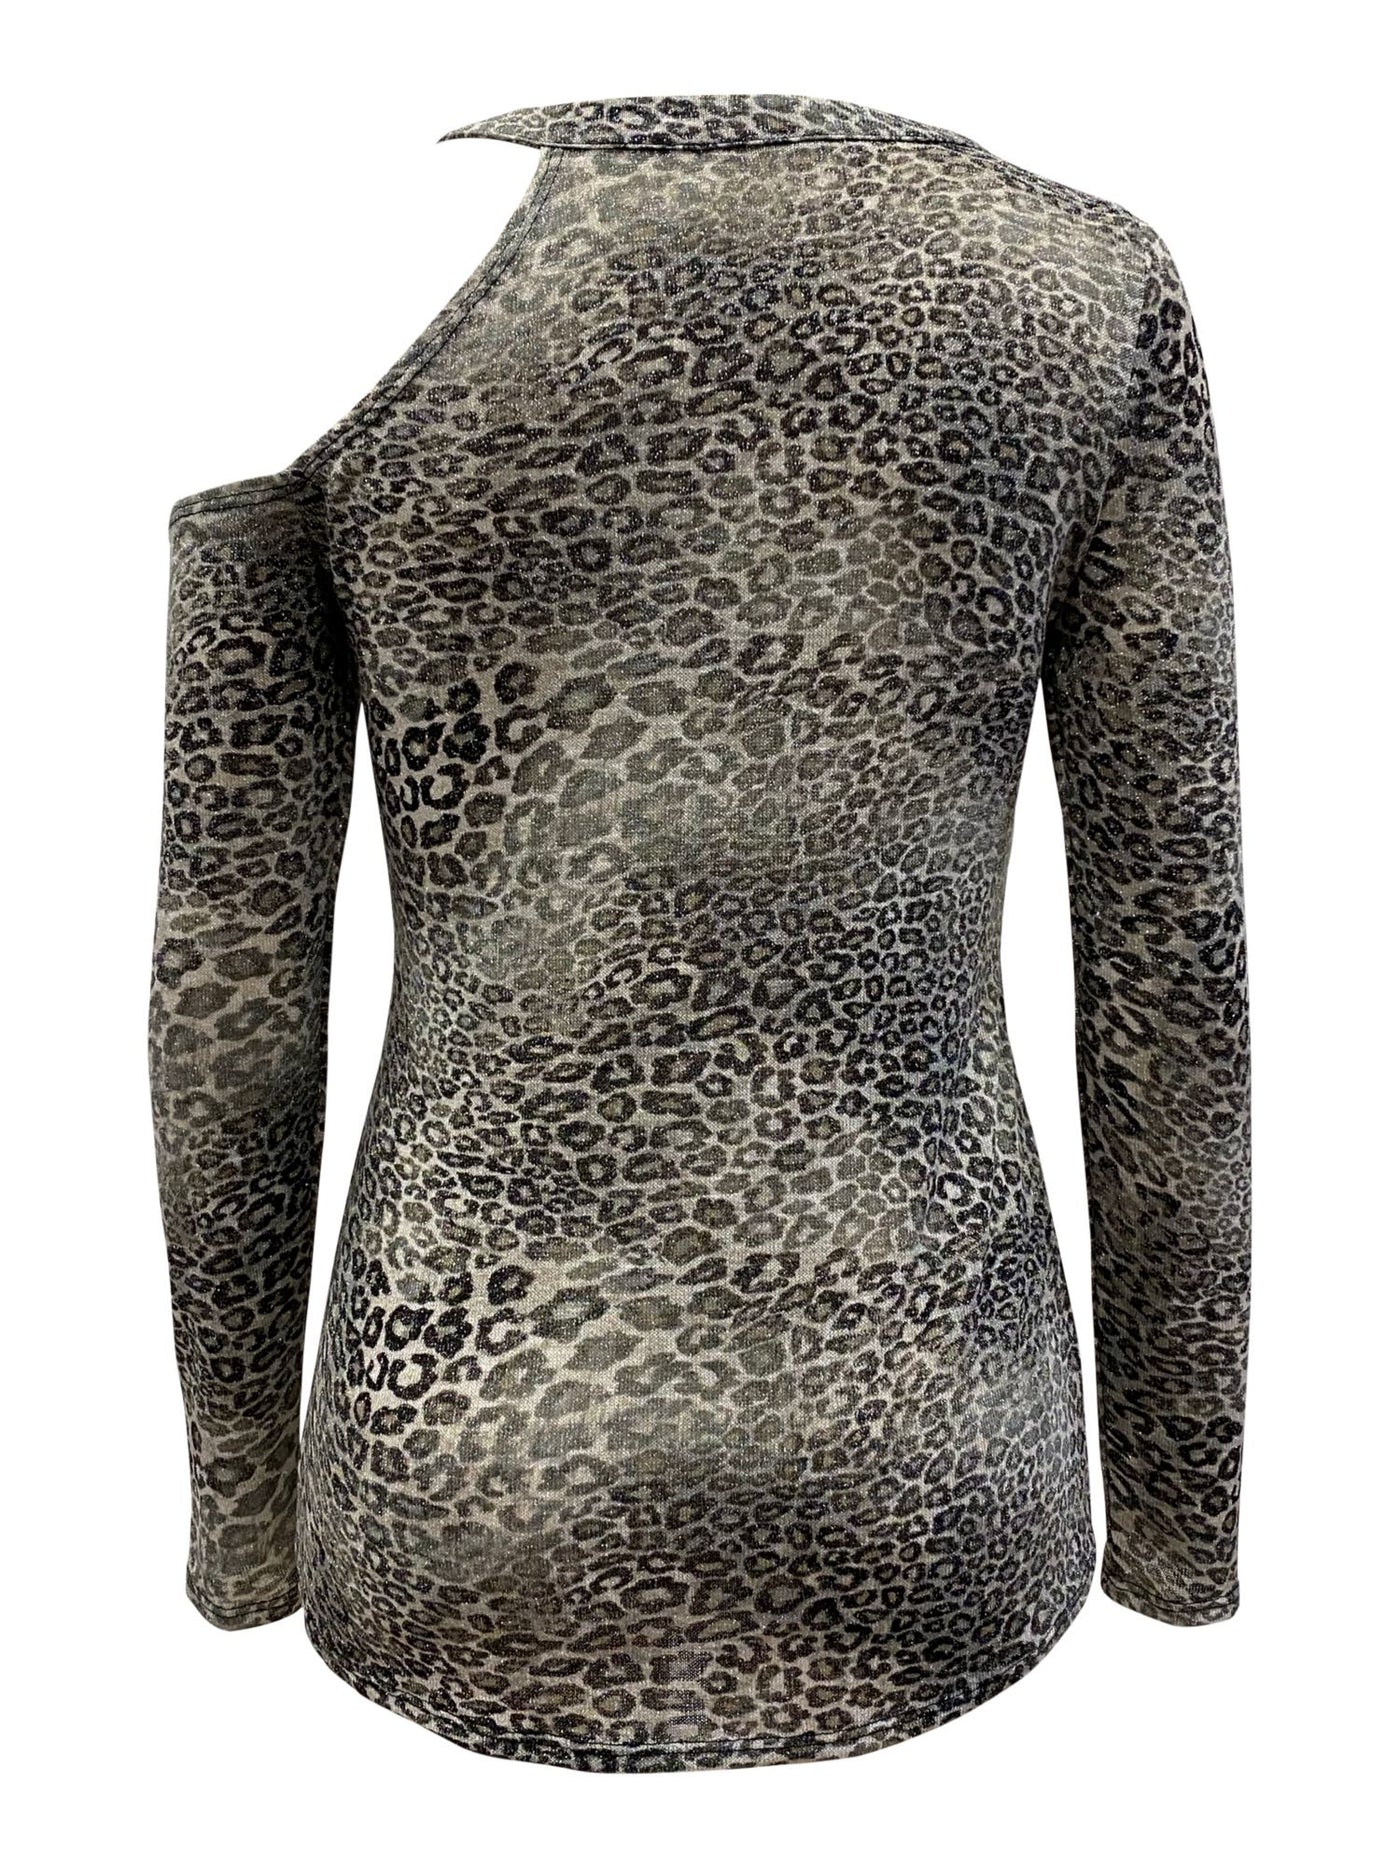 INC Womens Gray Cold Shoulder Glitter Animal Print Long Sleeve Crew Neck Top S